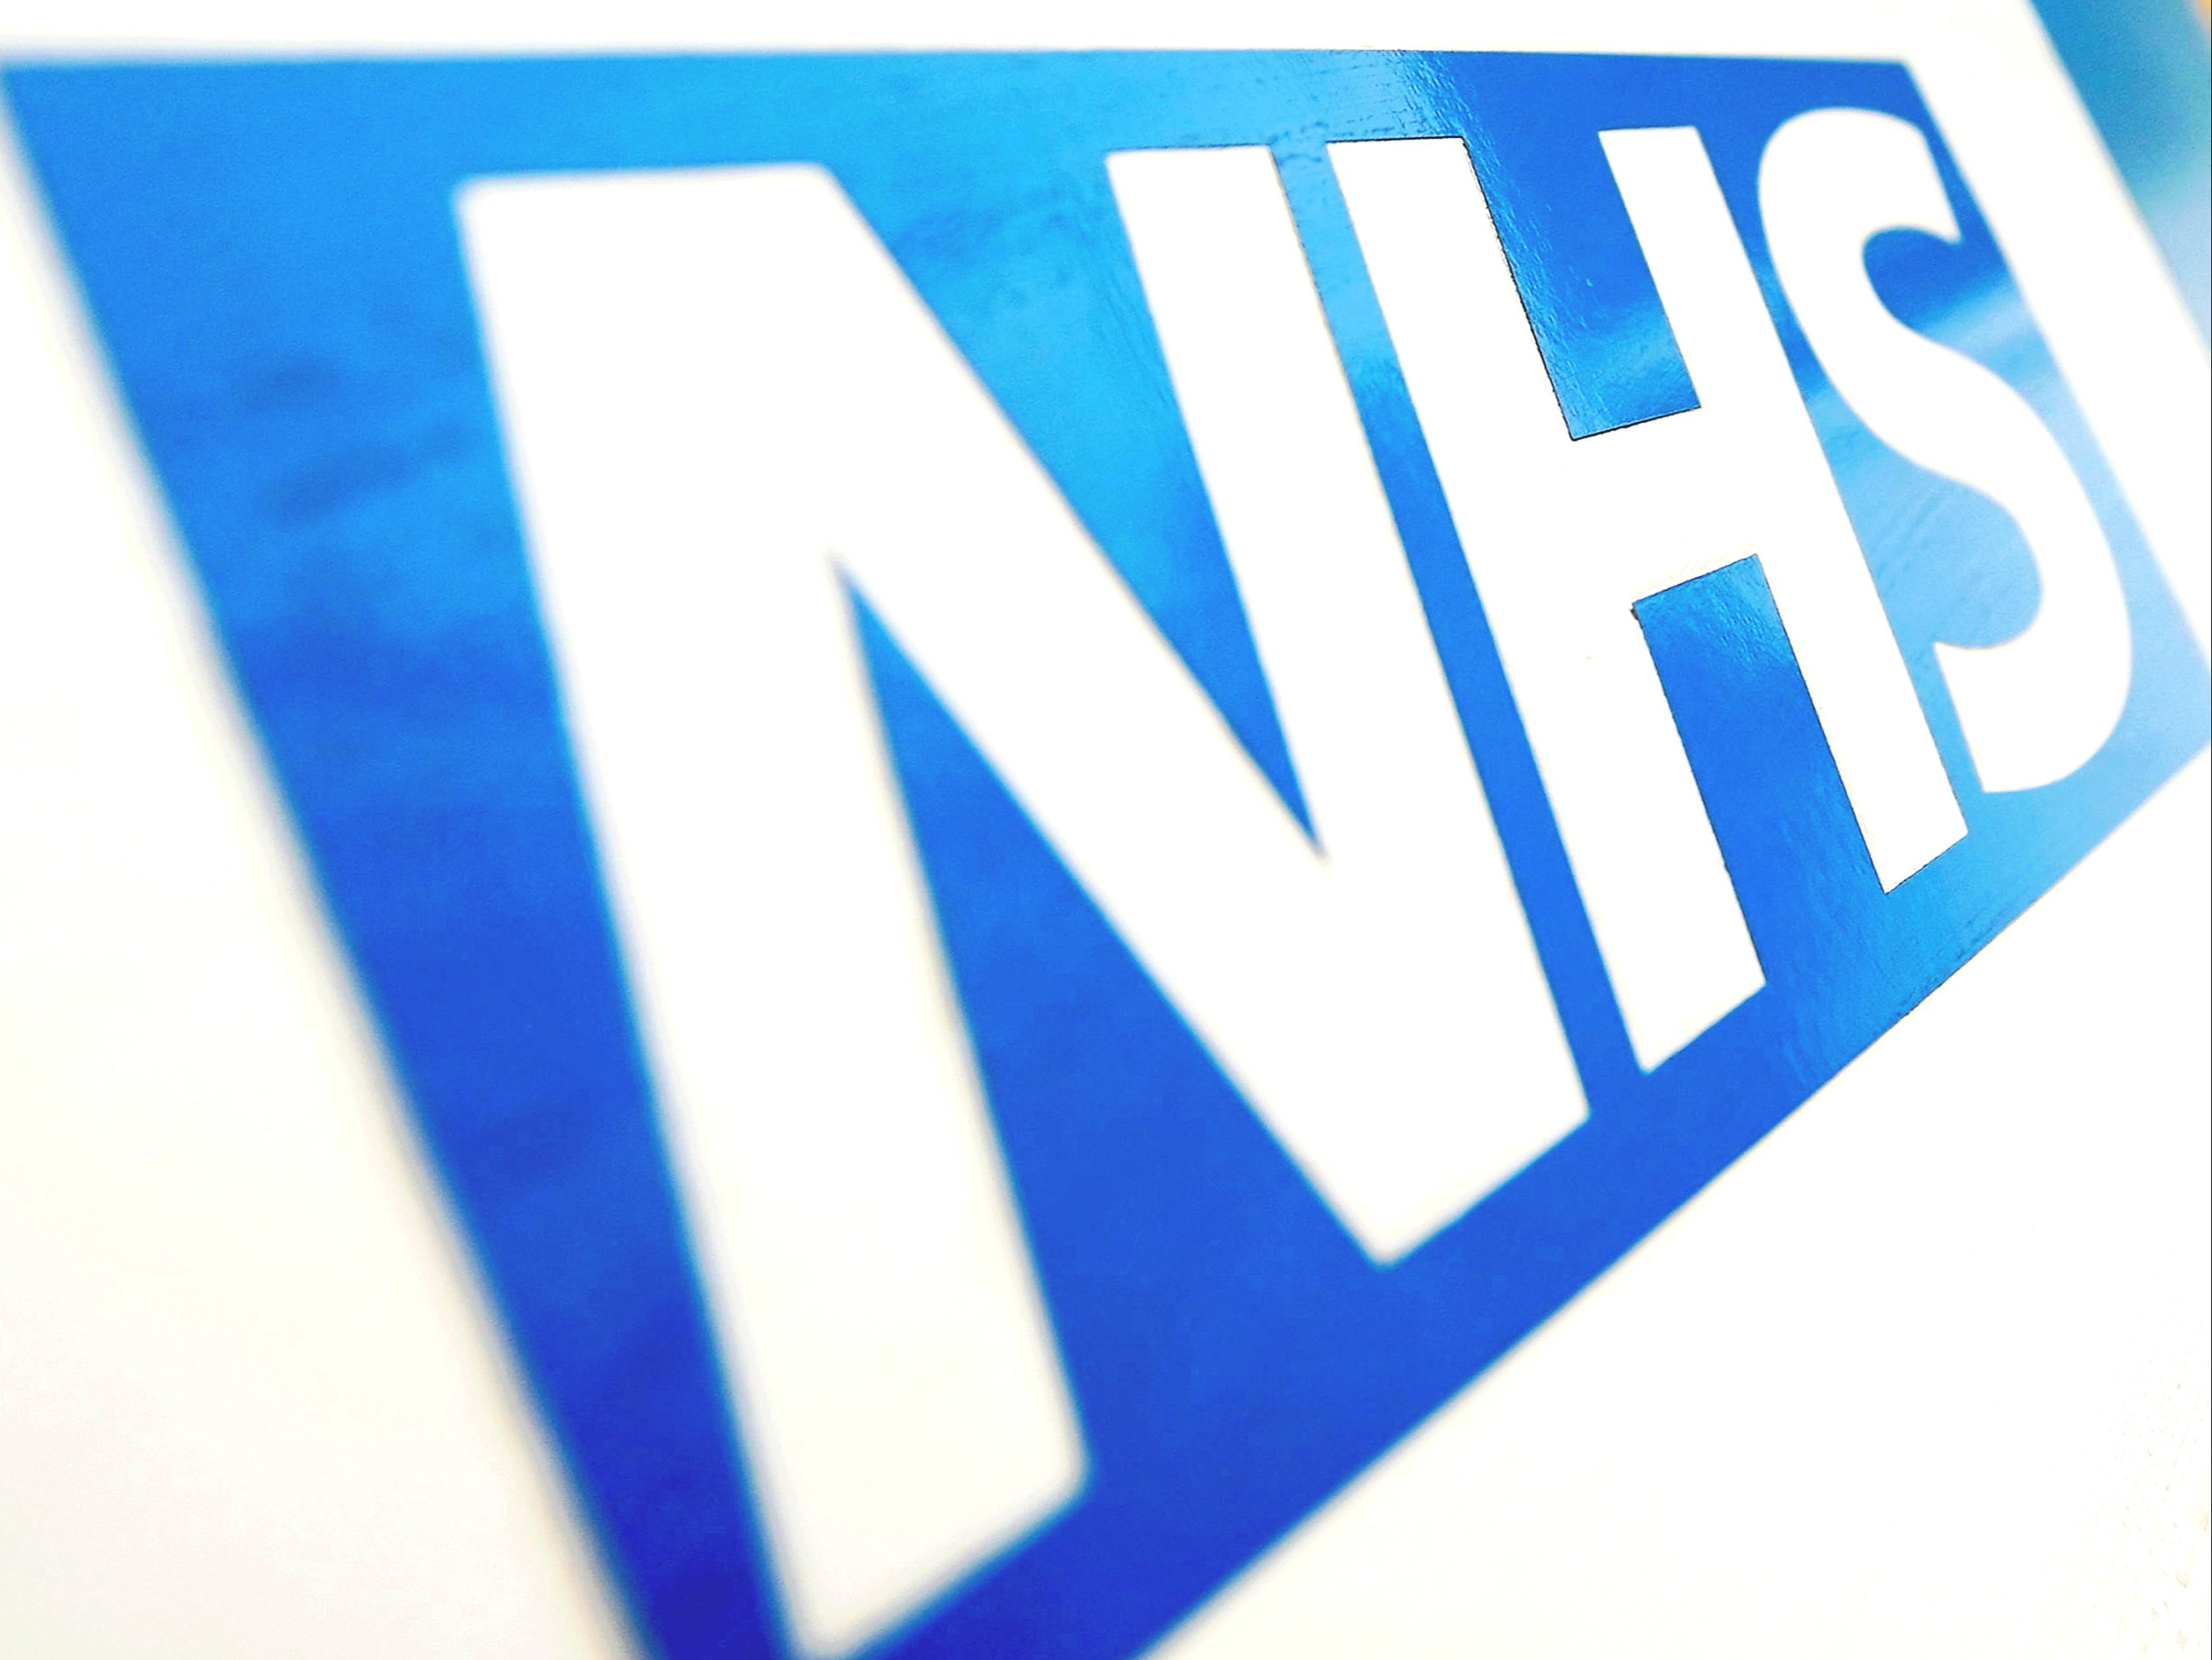 NHS is under severe pressure this winter